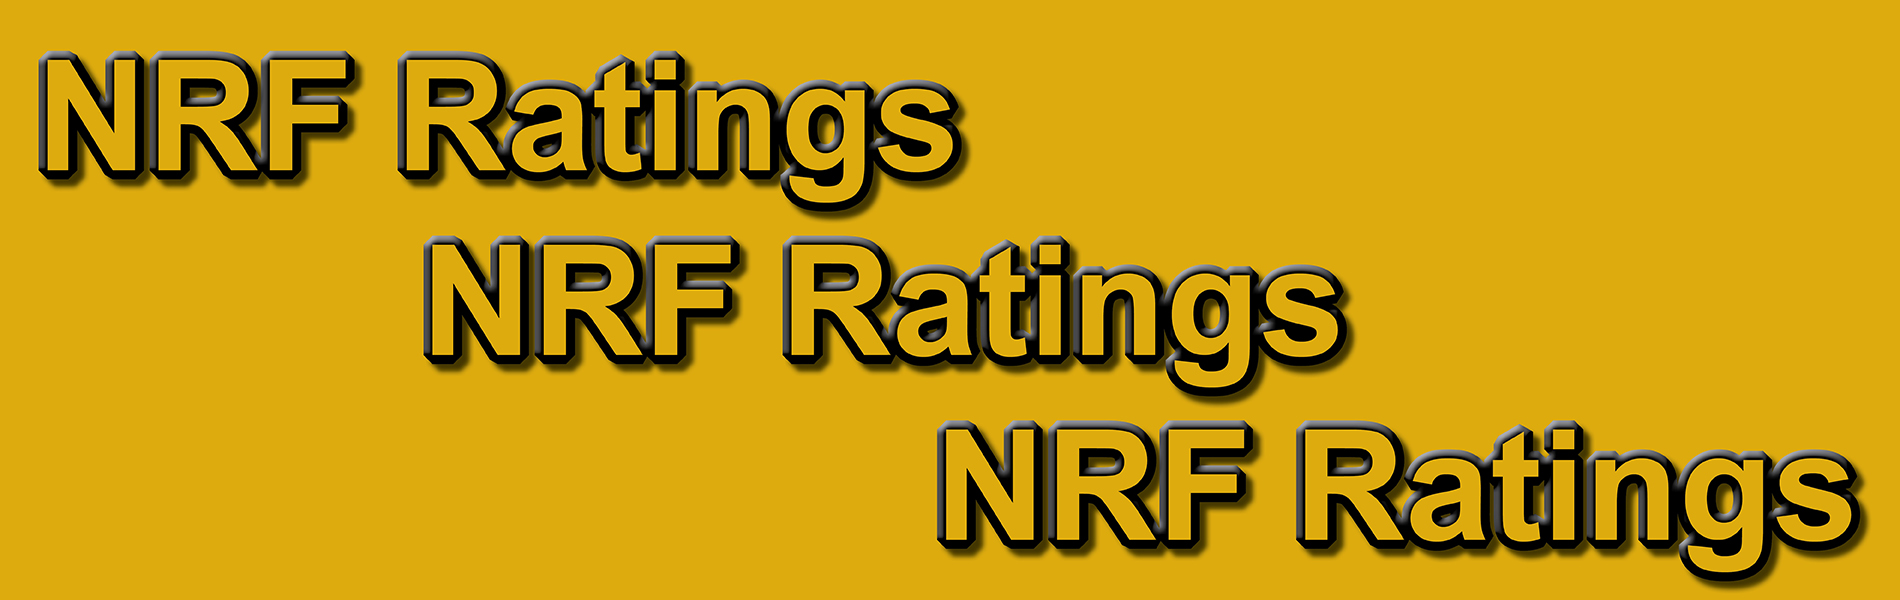 NRF ratings foto websize